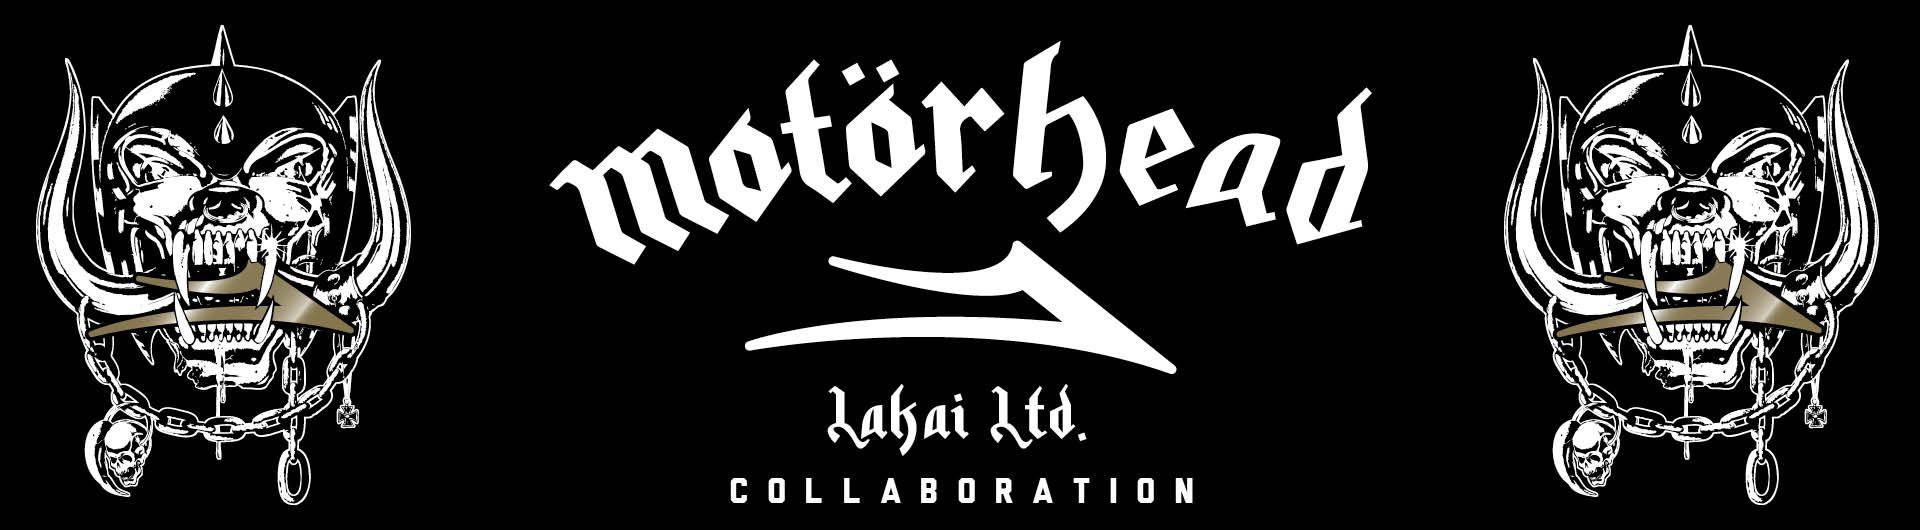 Lakai Logo - Shop the Lakai x Motörhead Collaboration - Lakai.com